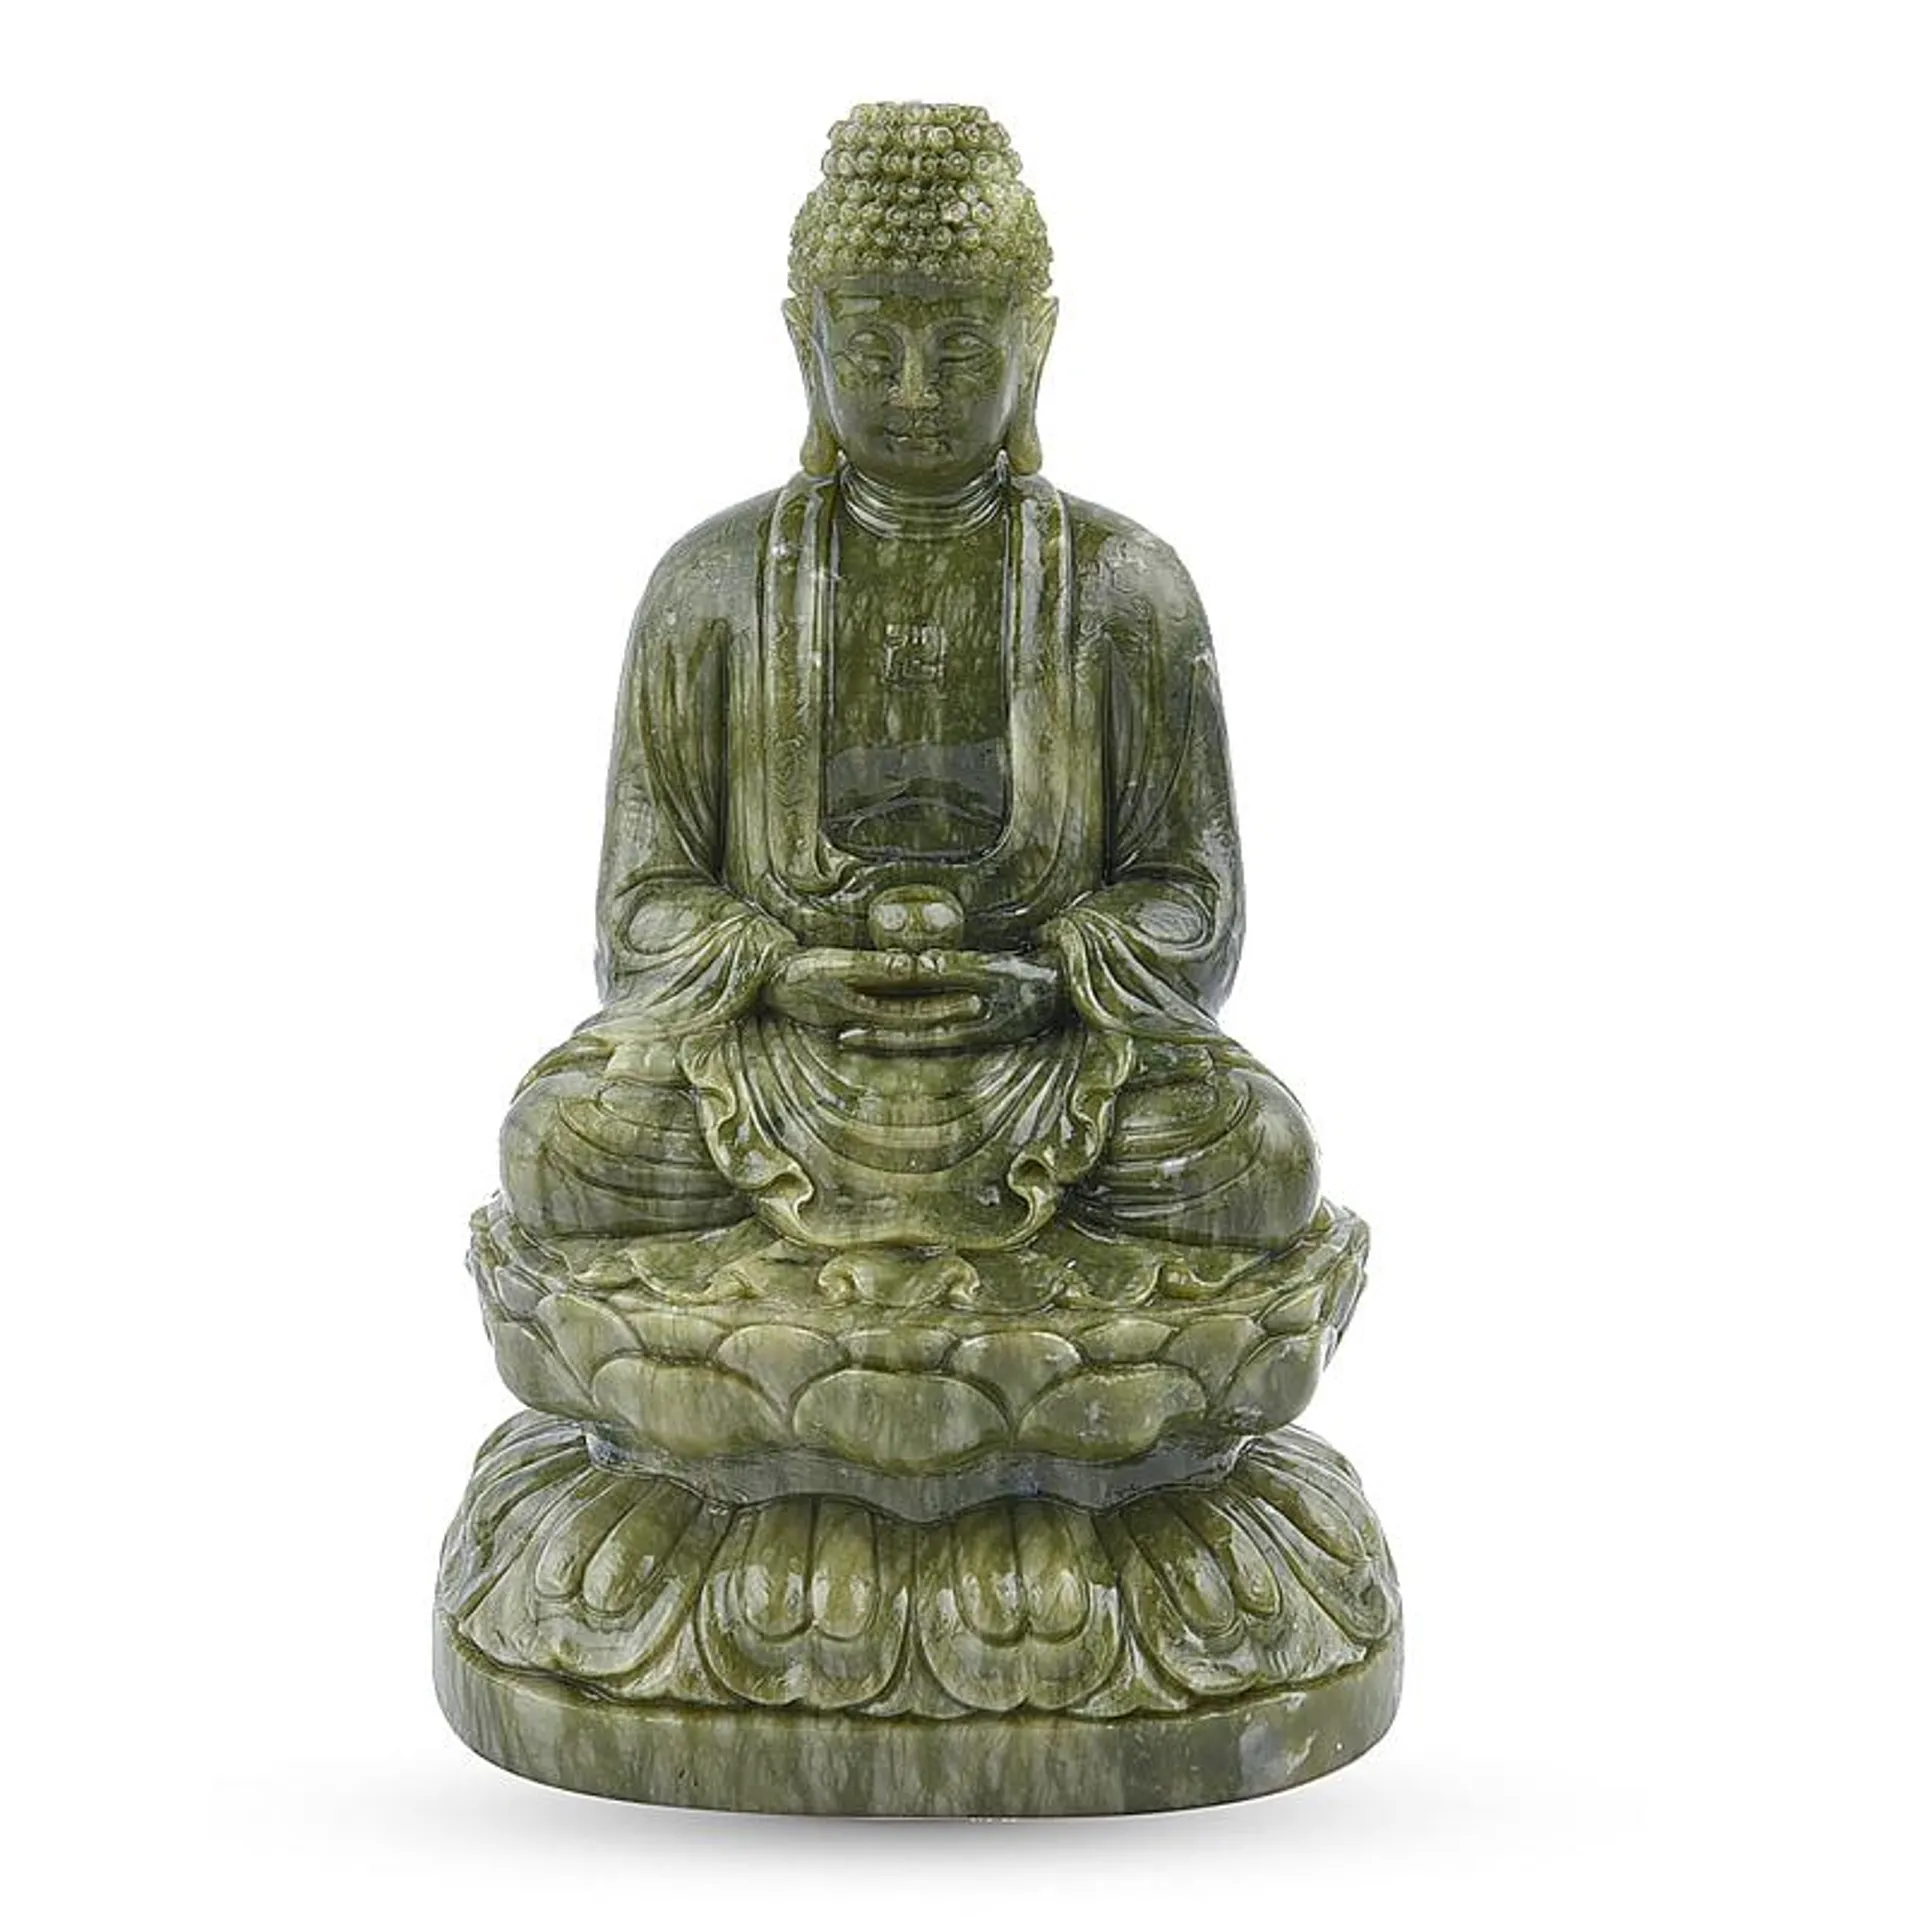 Hand-Crafted Natural Serpentine Buddha Figurine - Green